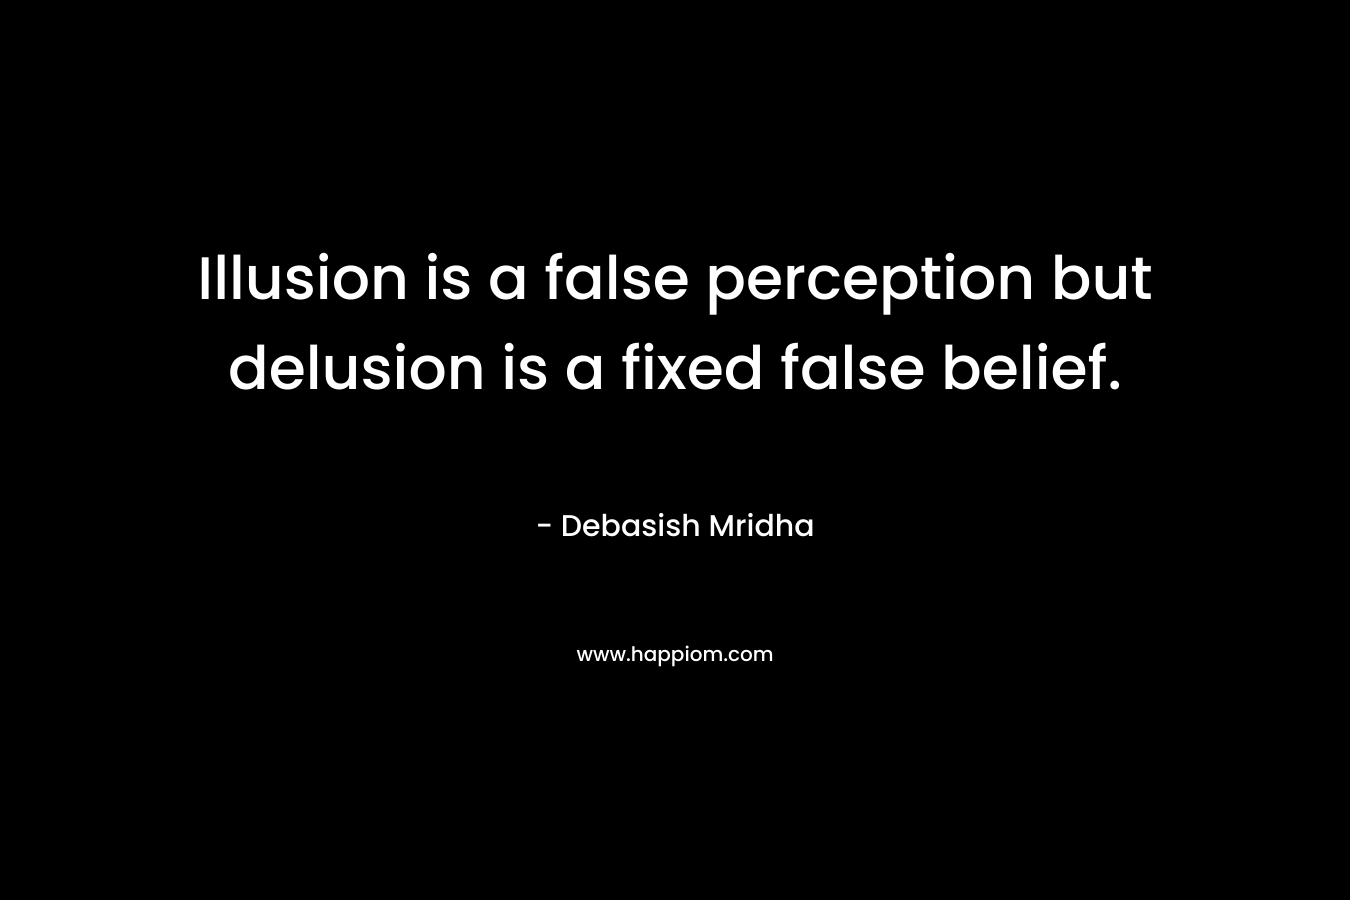 Illusion is a false perception but delusion is a fixed false belief.